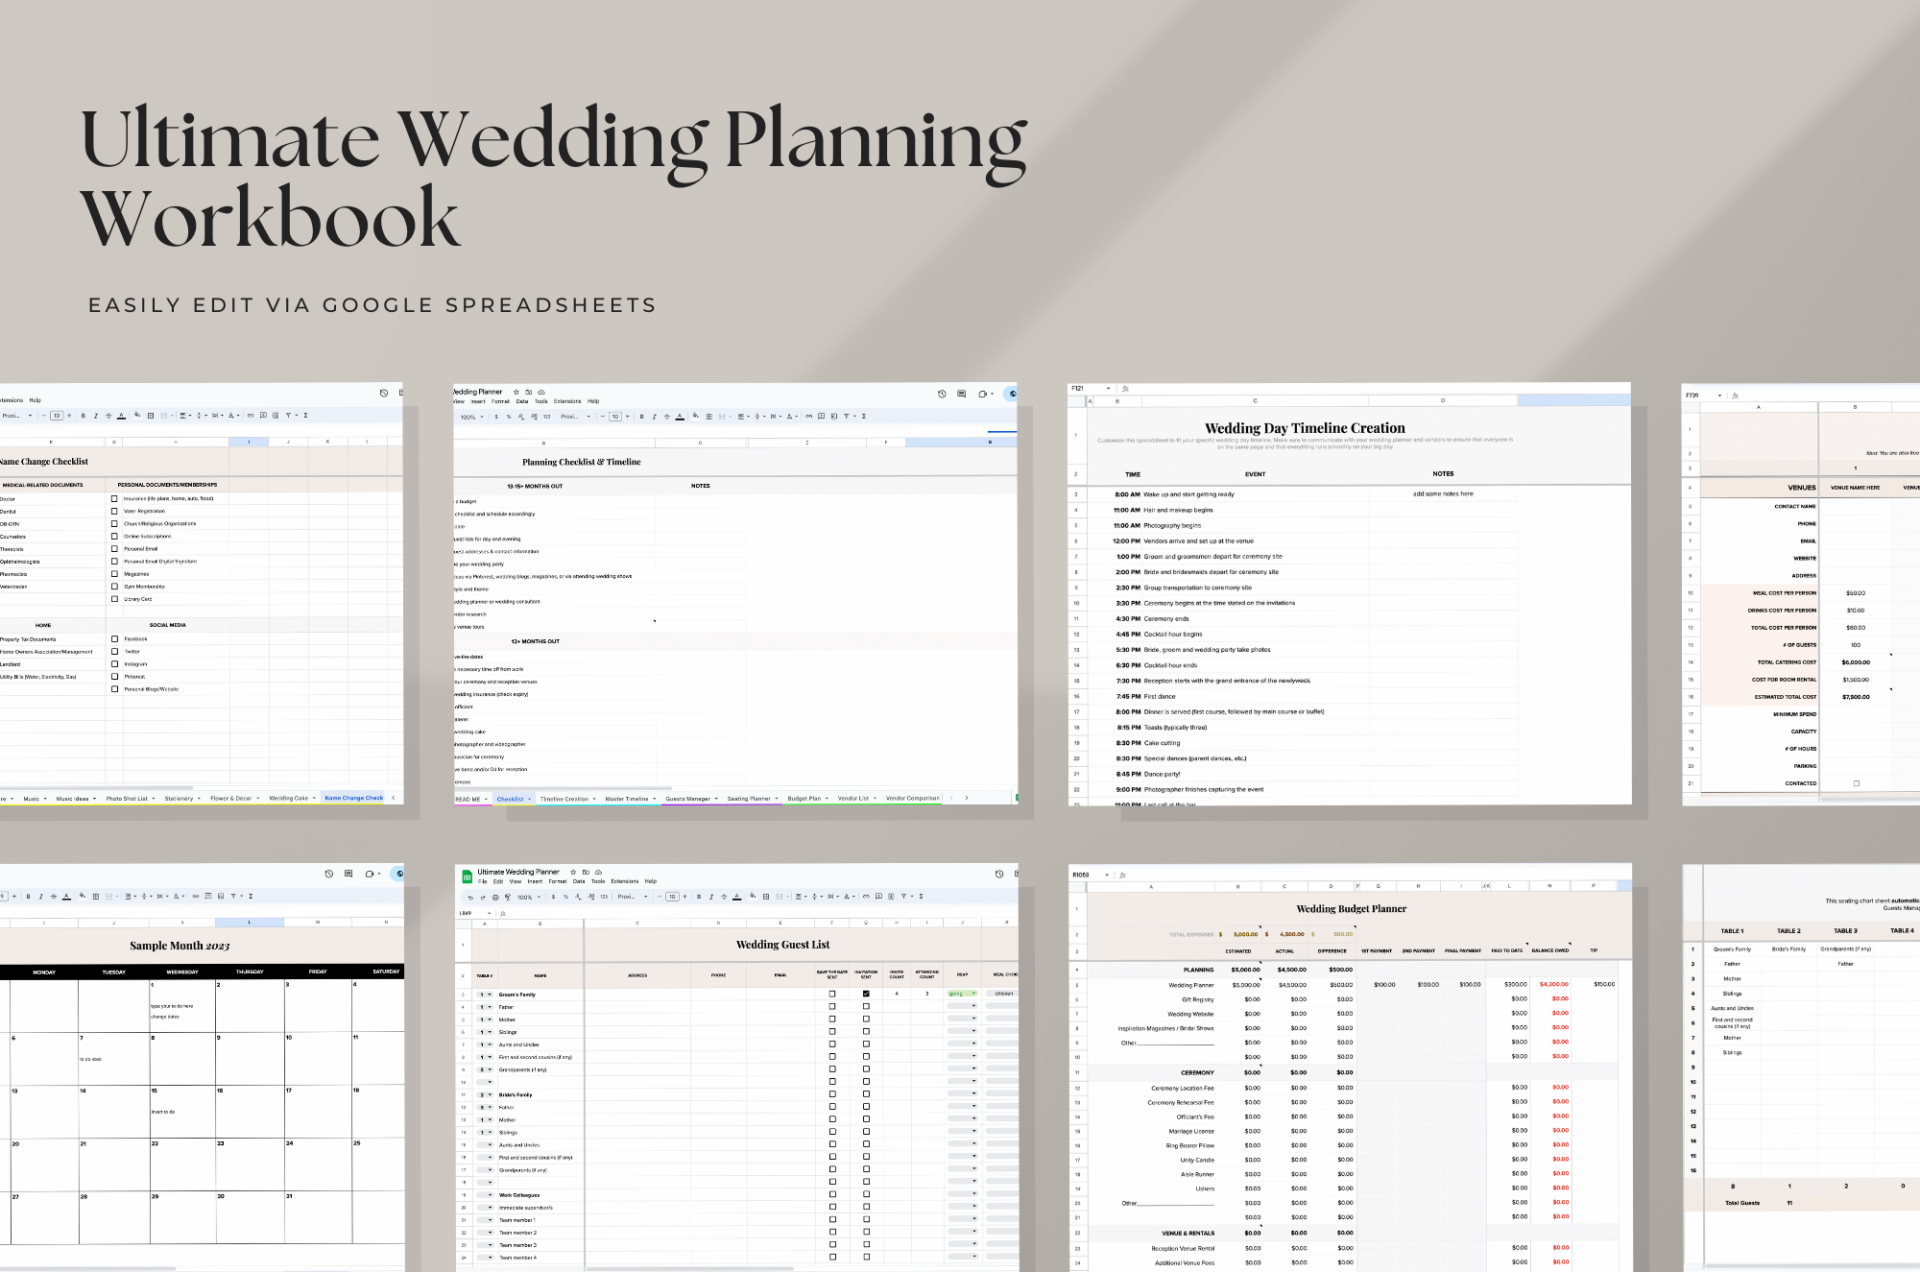 Ultimate Wedding Planning Workbook 10+ Best Wedding Planning Checklists and Templates